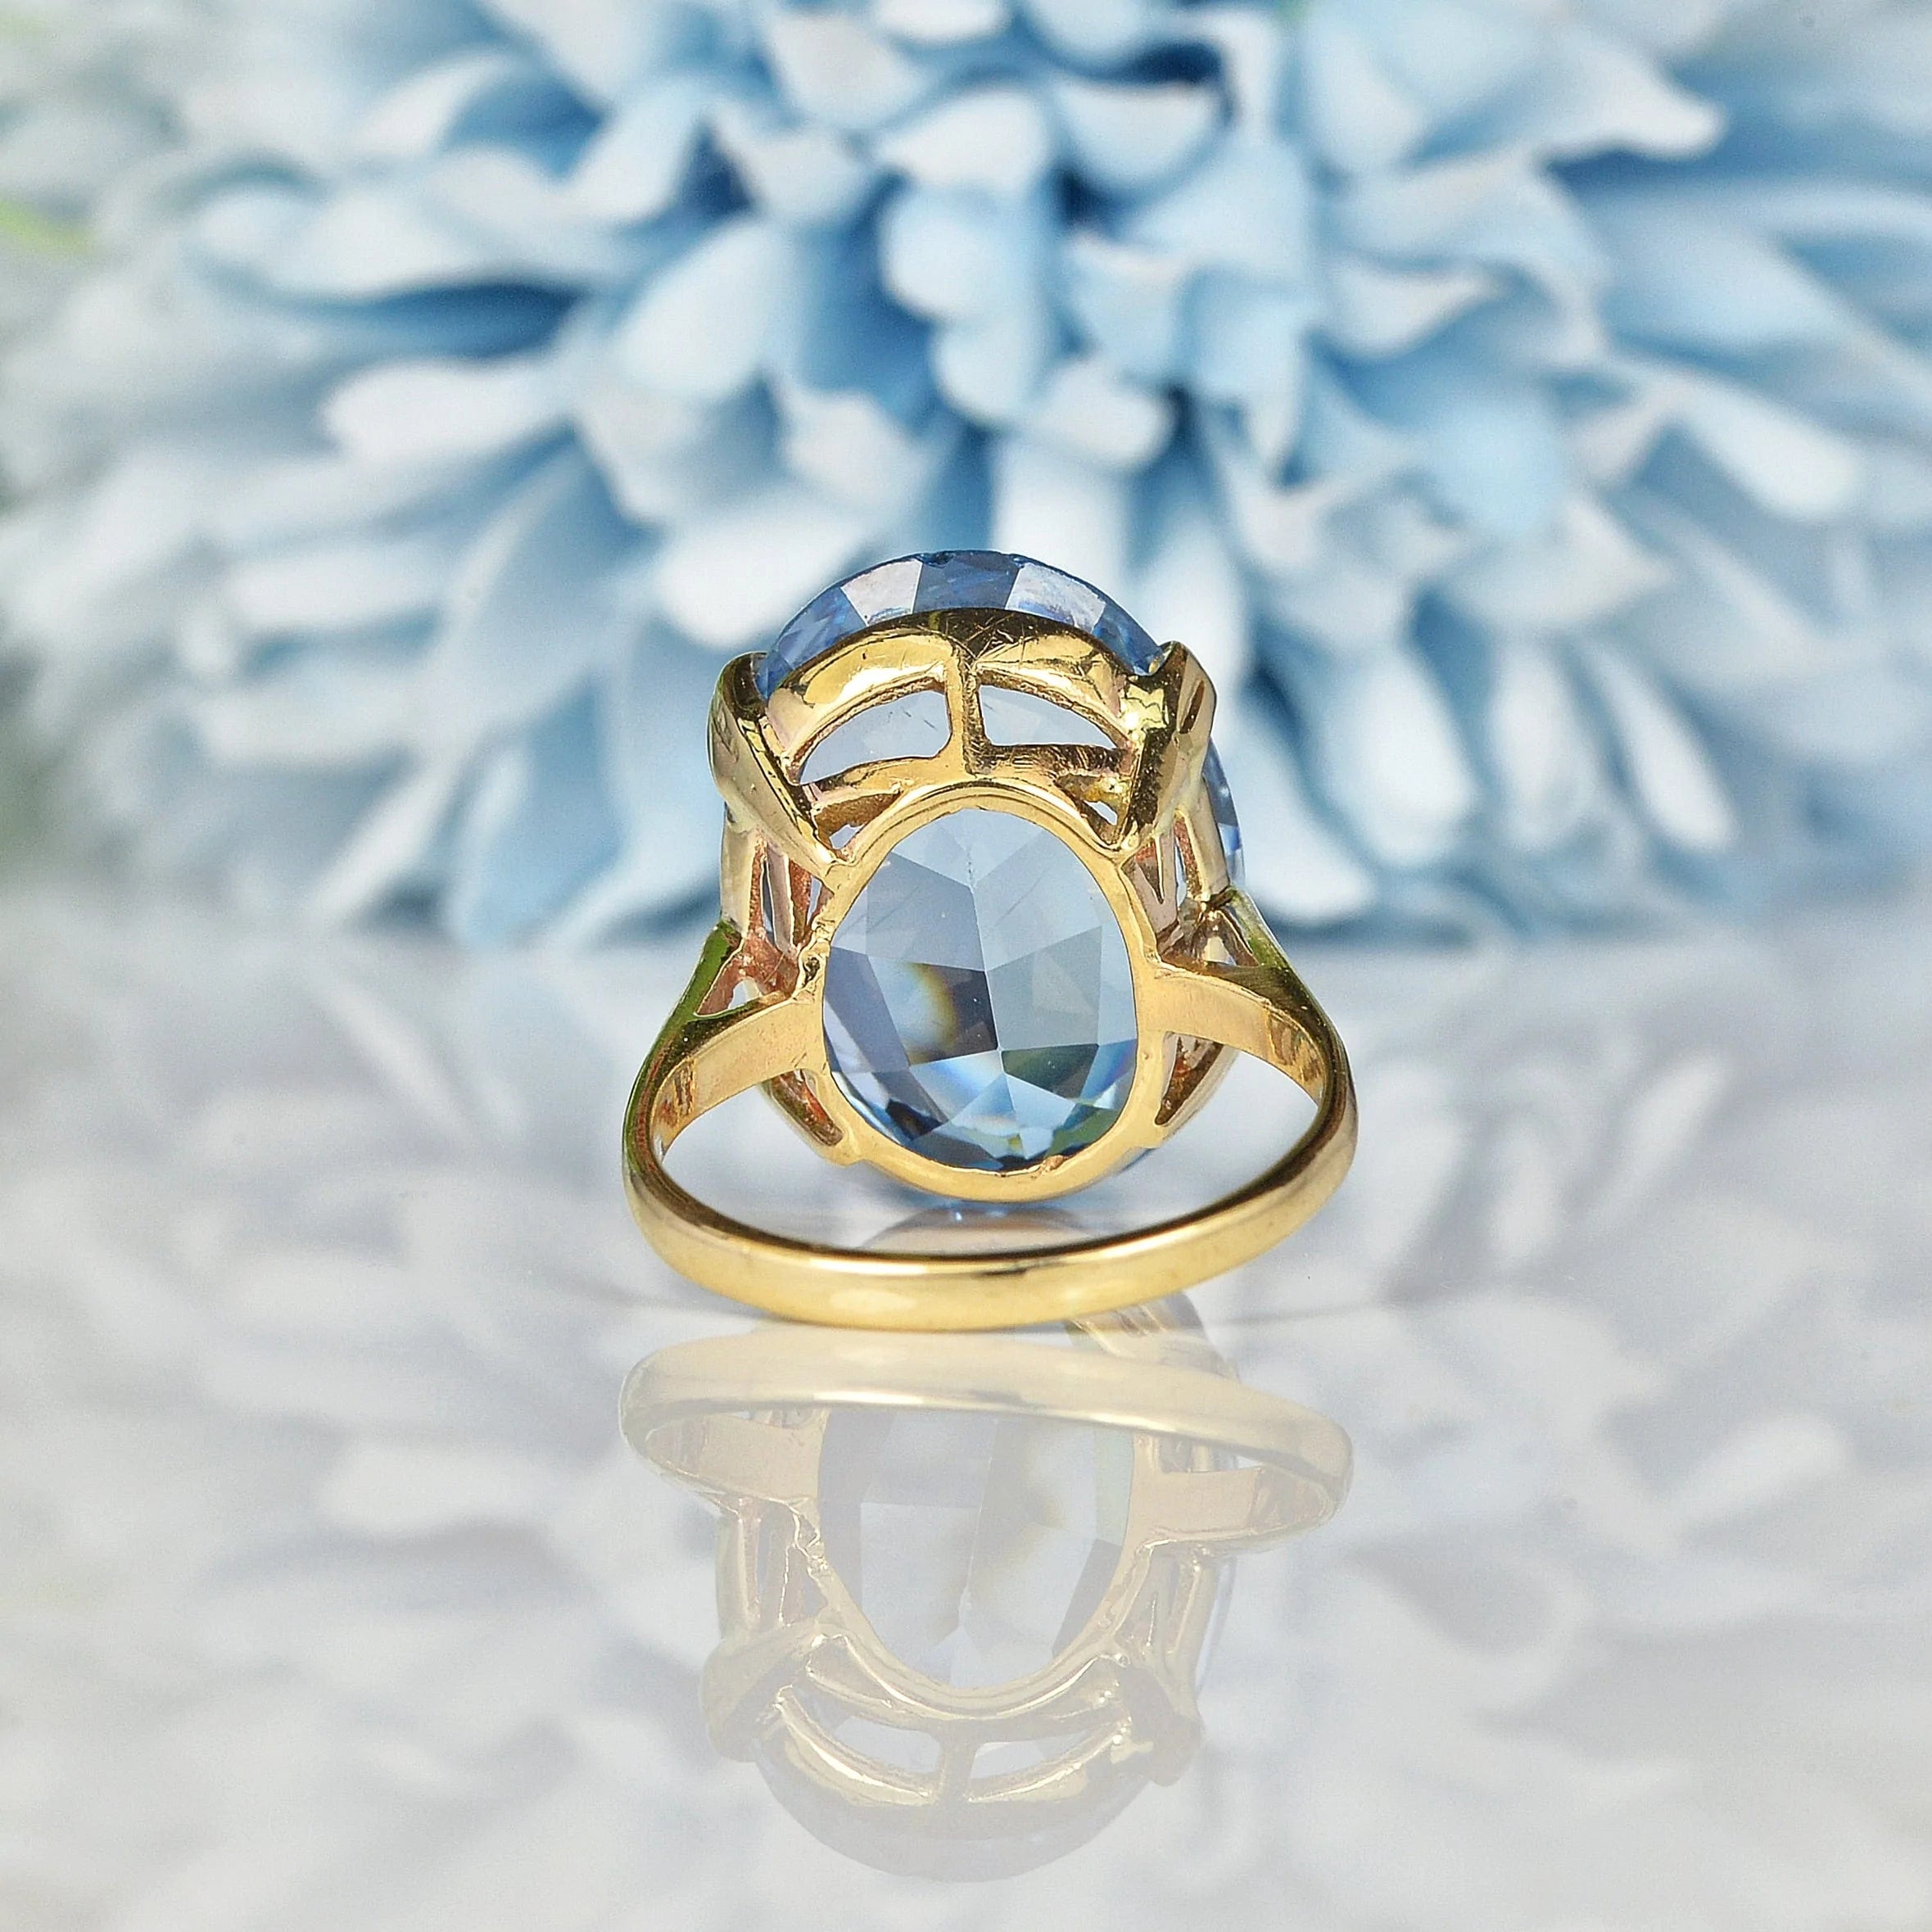 Ellibelle Jewellery VINTAGE BLUE TOPAZ 9CT GOLD COCKTAIL RING